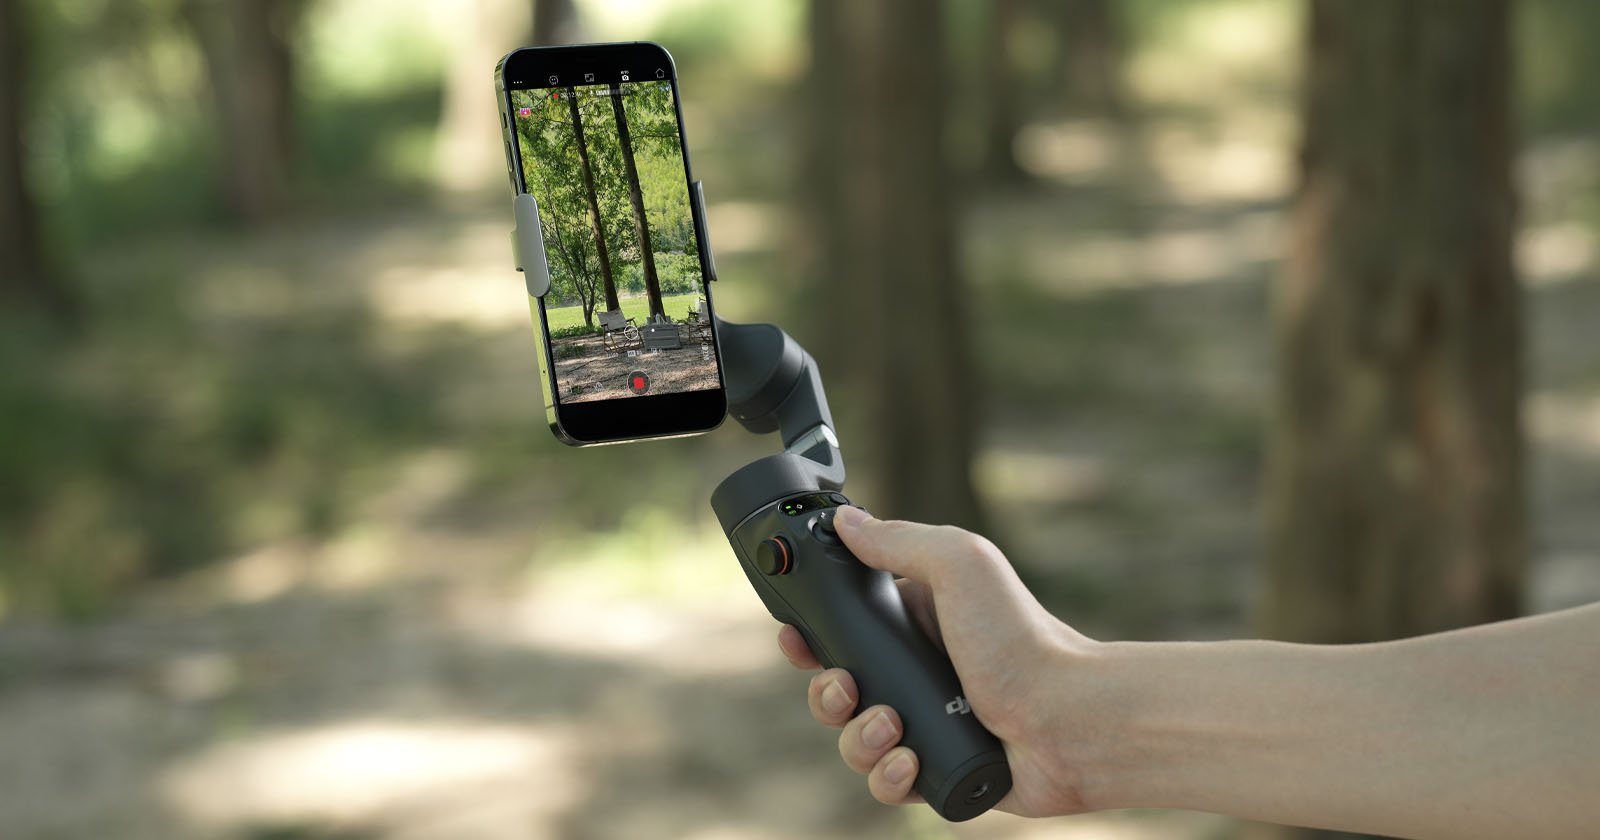 DJI's Osmo Mobile 6 is its Latest Generation Smartphone Gimbal